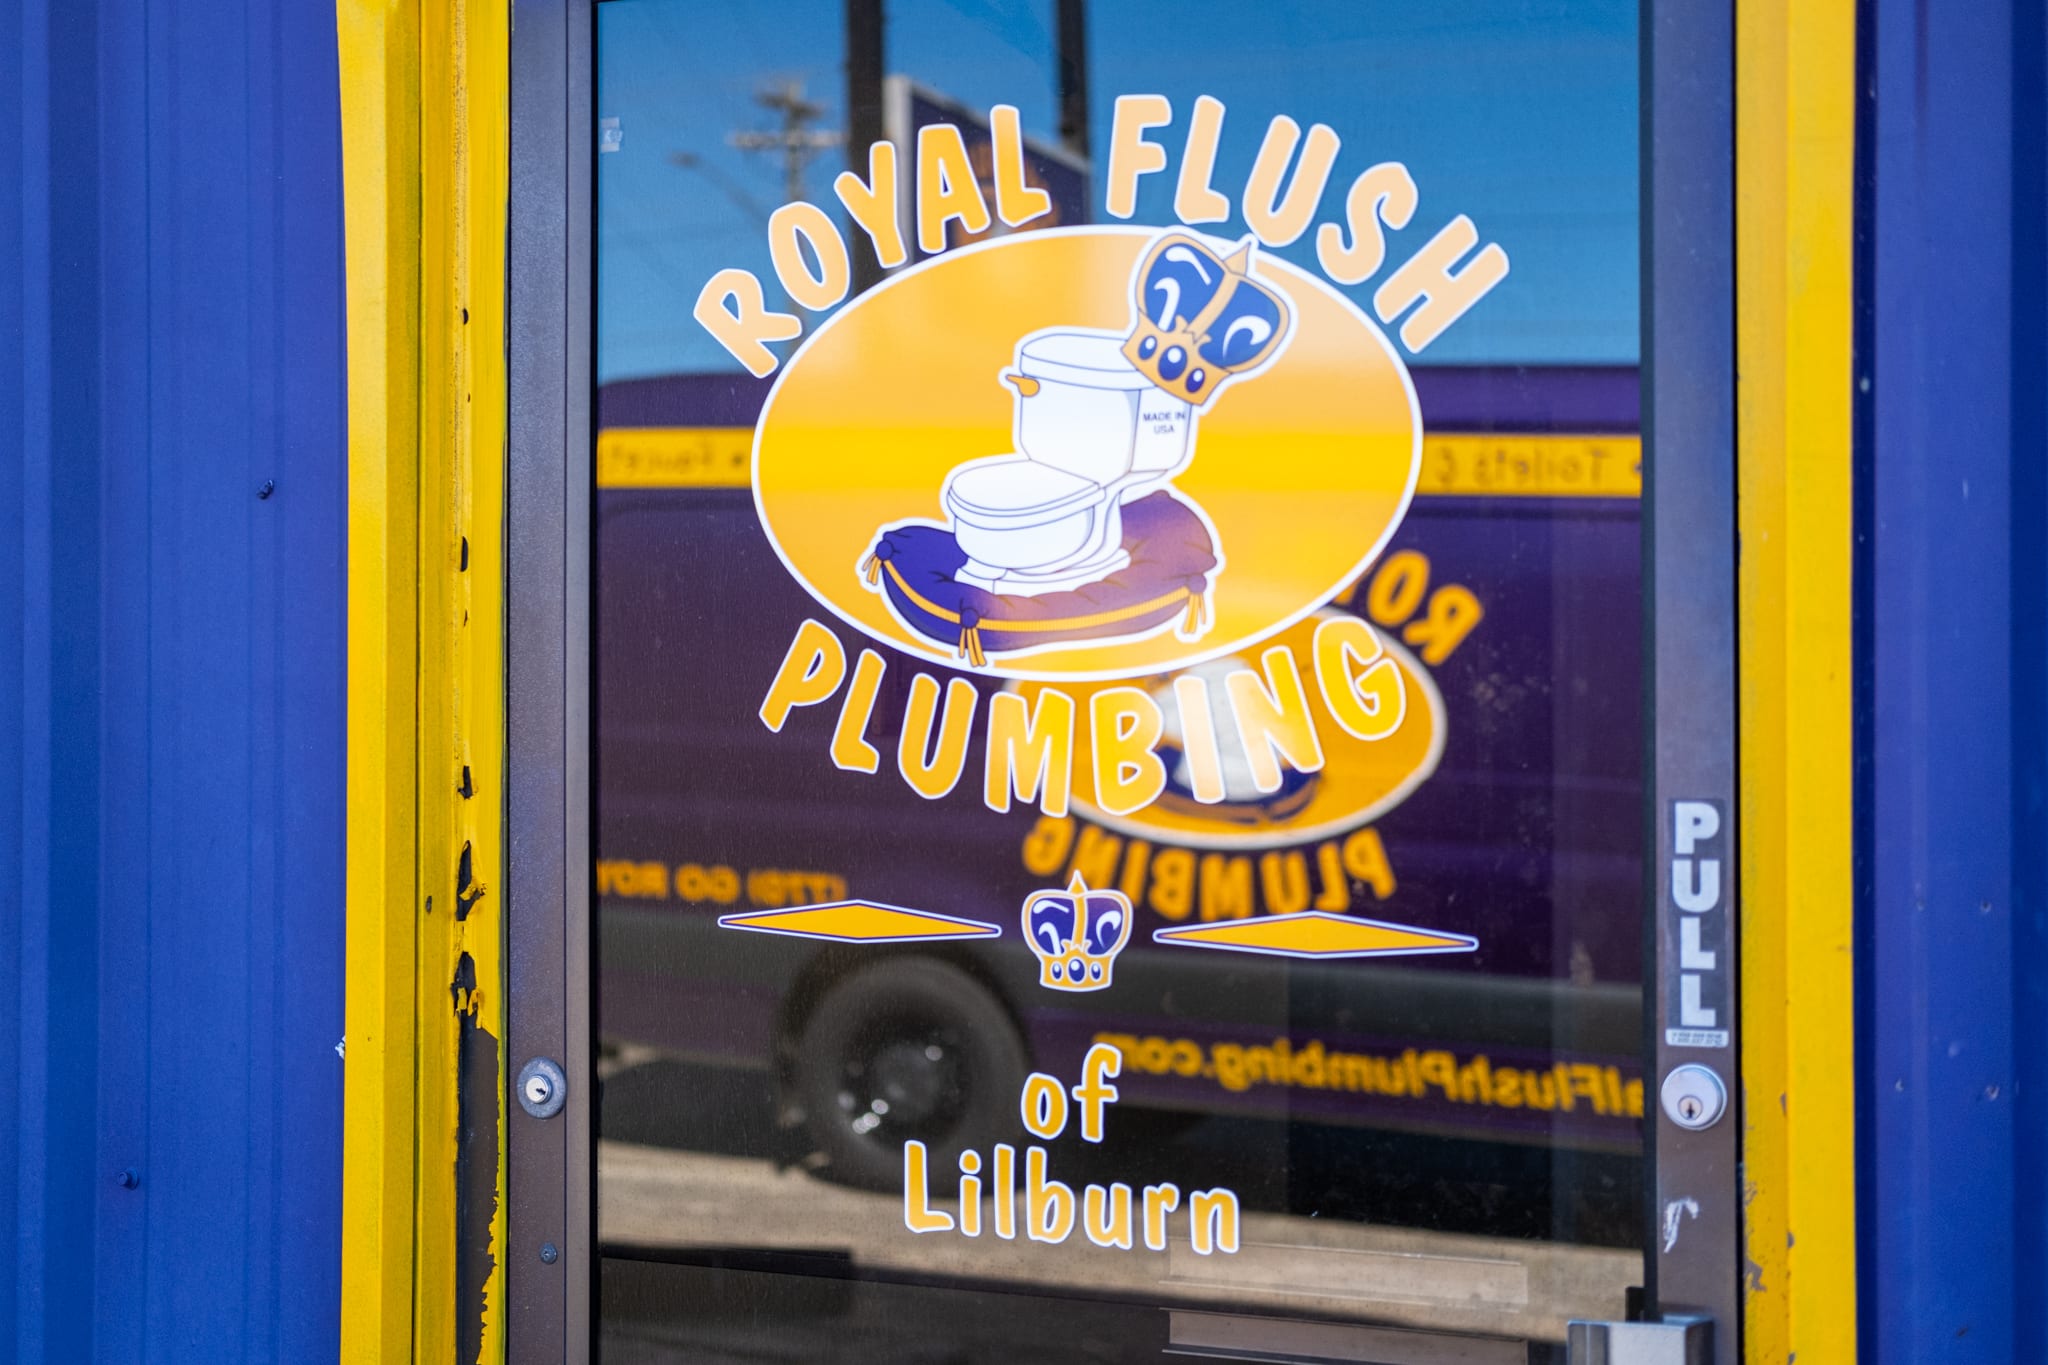 Royal Flush Plumbing Of Lilburn, US, plumbing services near me